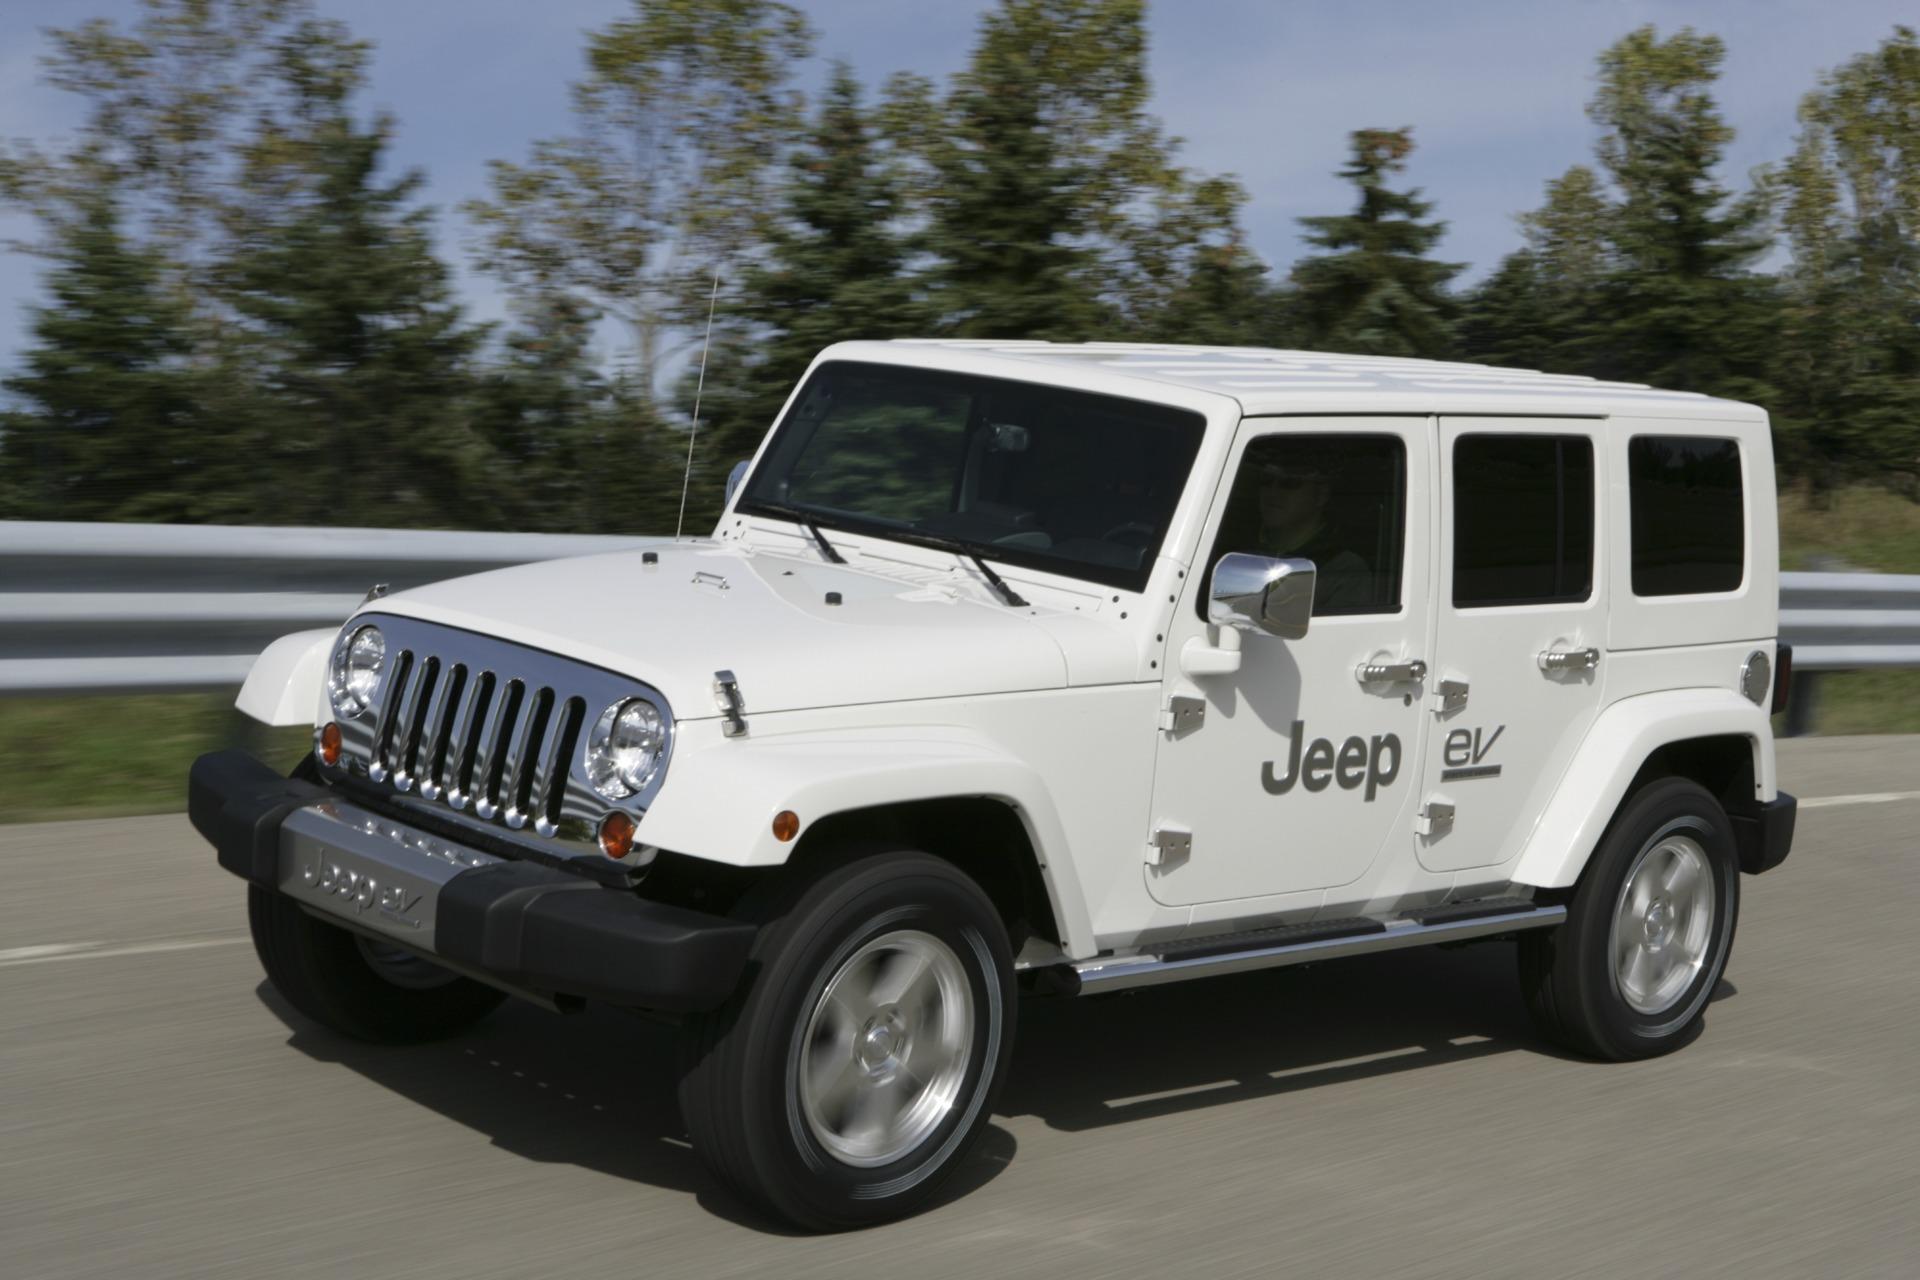 2009 Jeep concept vehicles